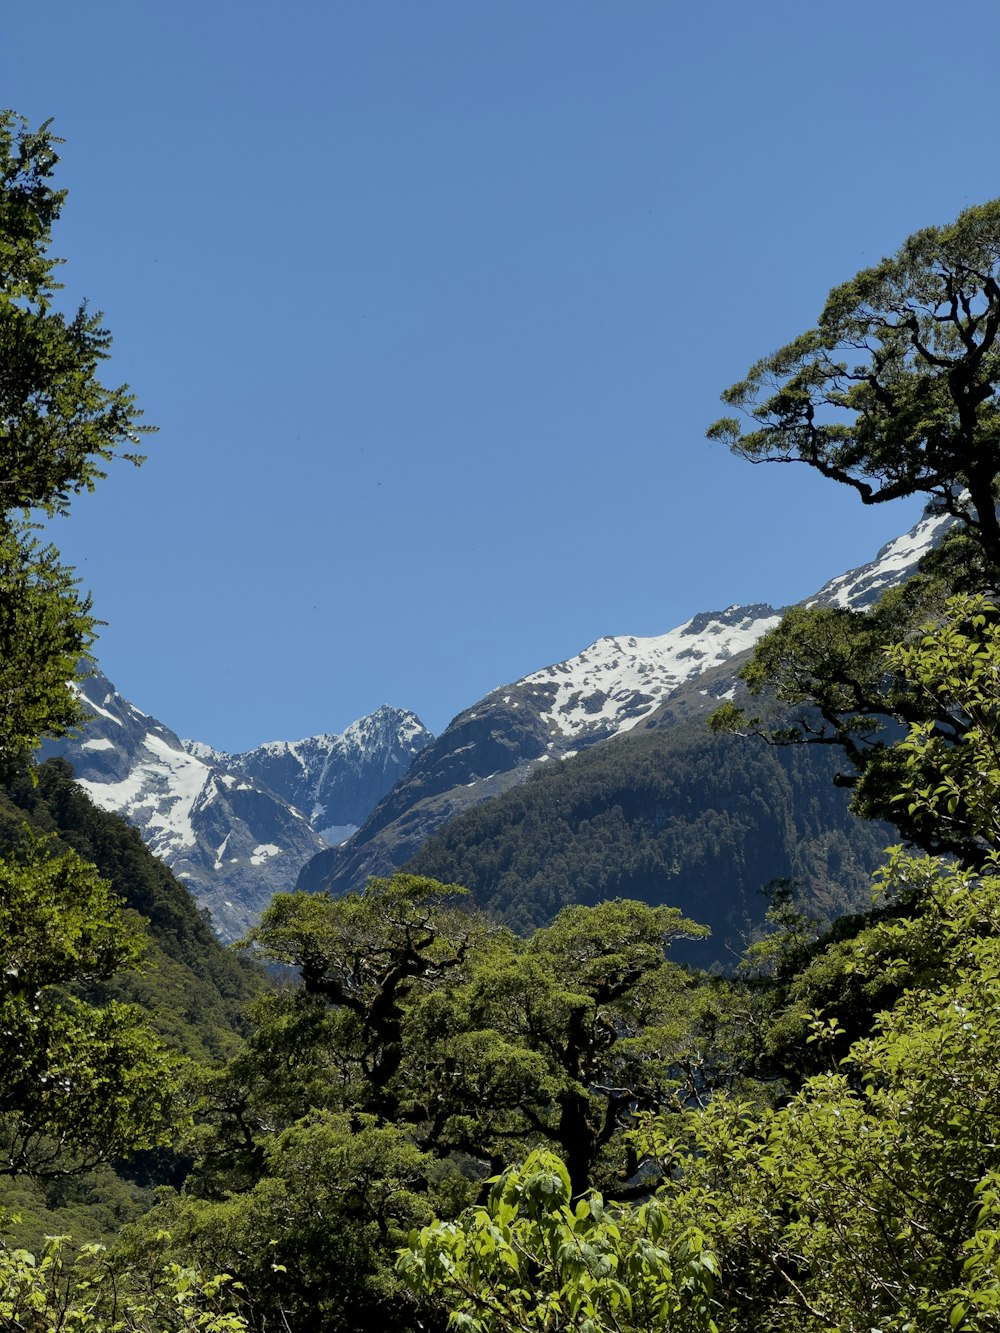 a view of a snowy mountain range through the trees